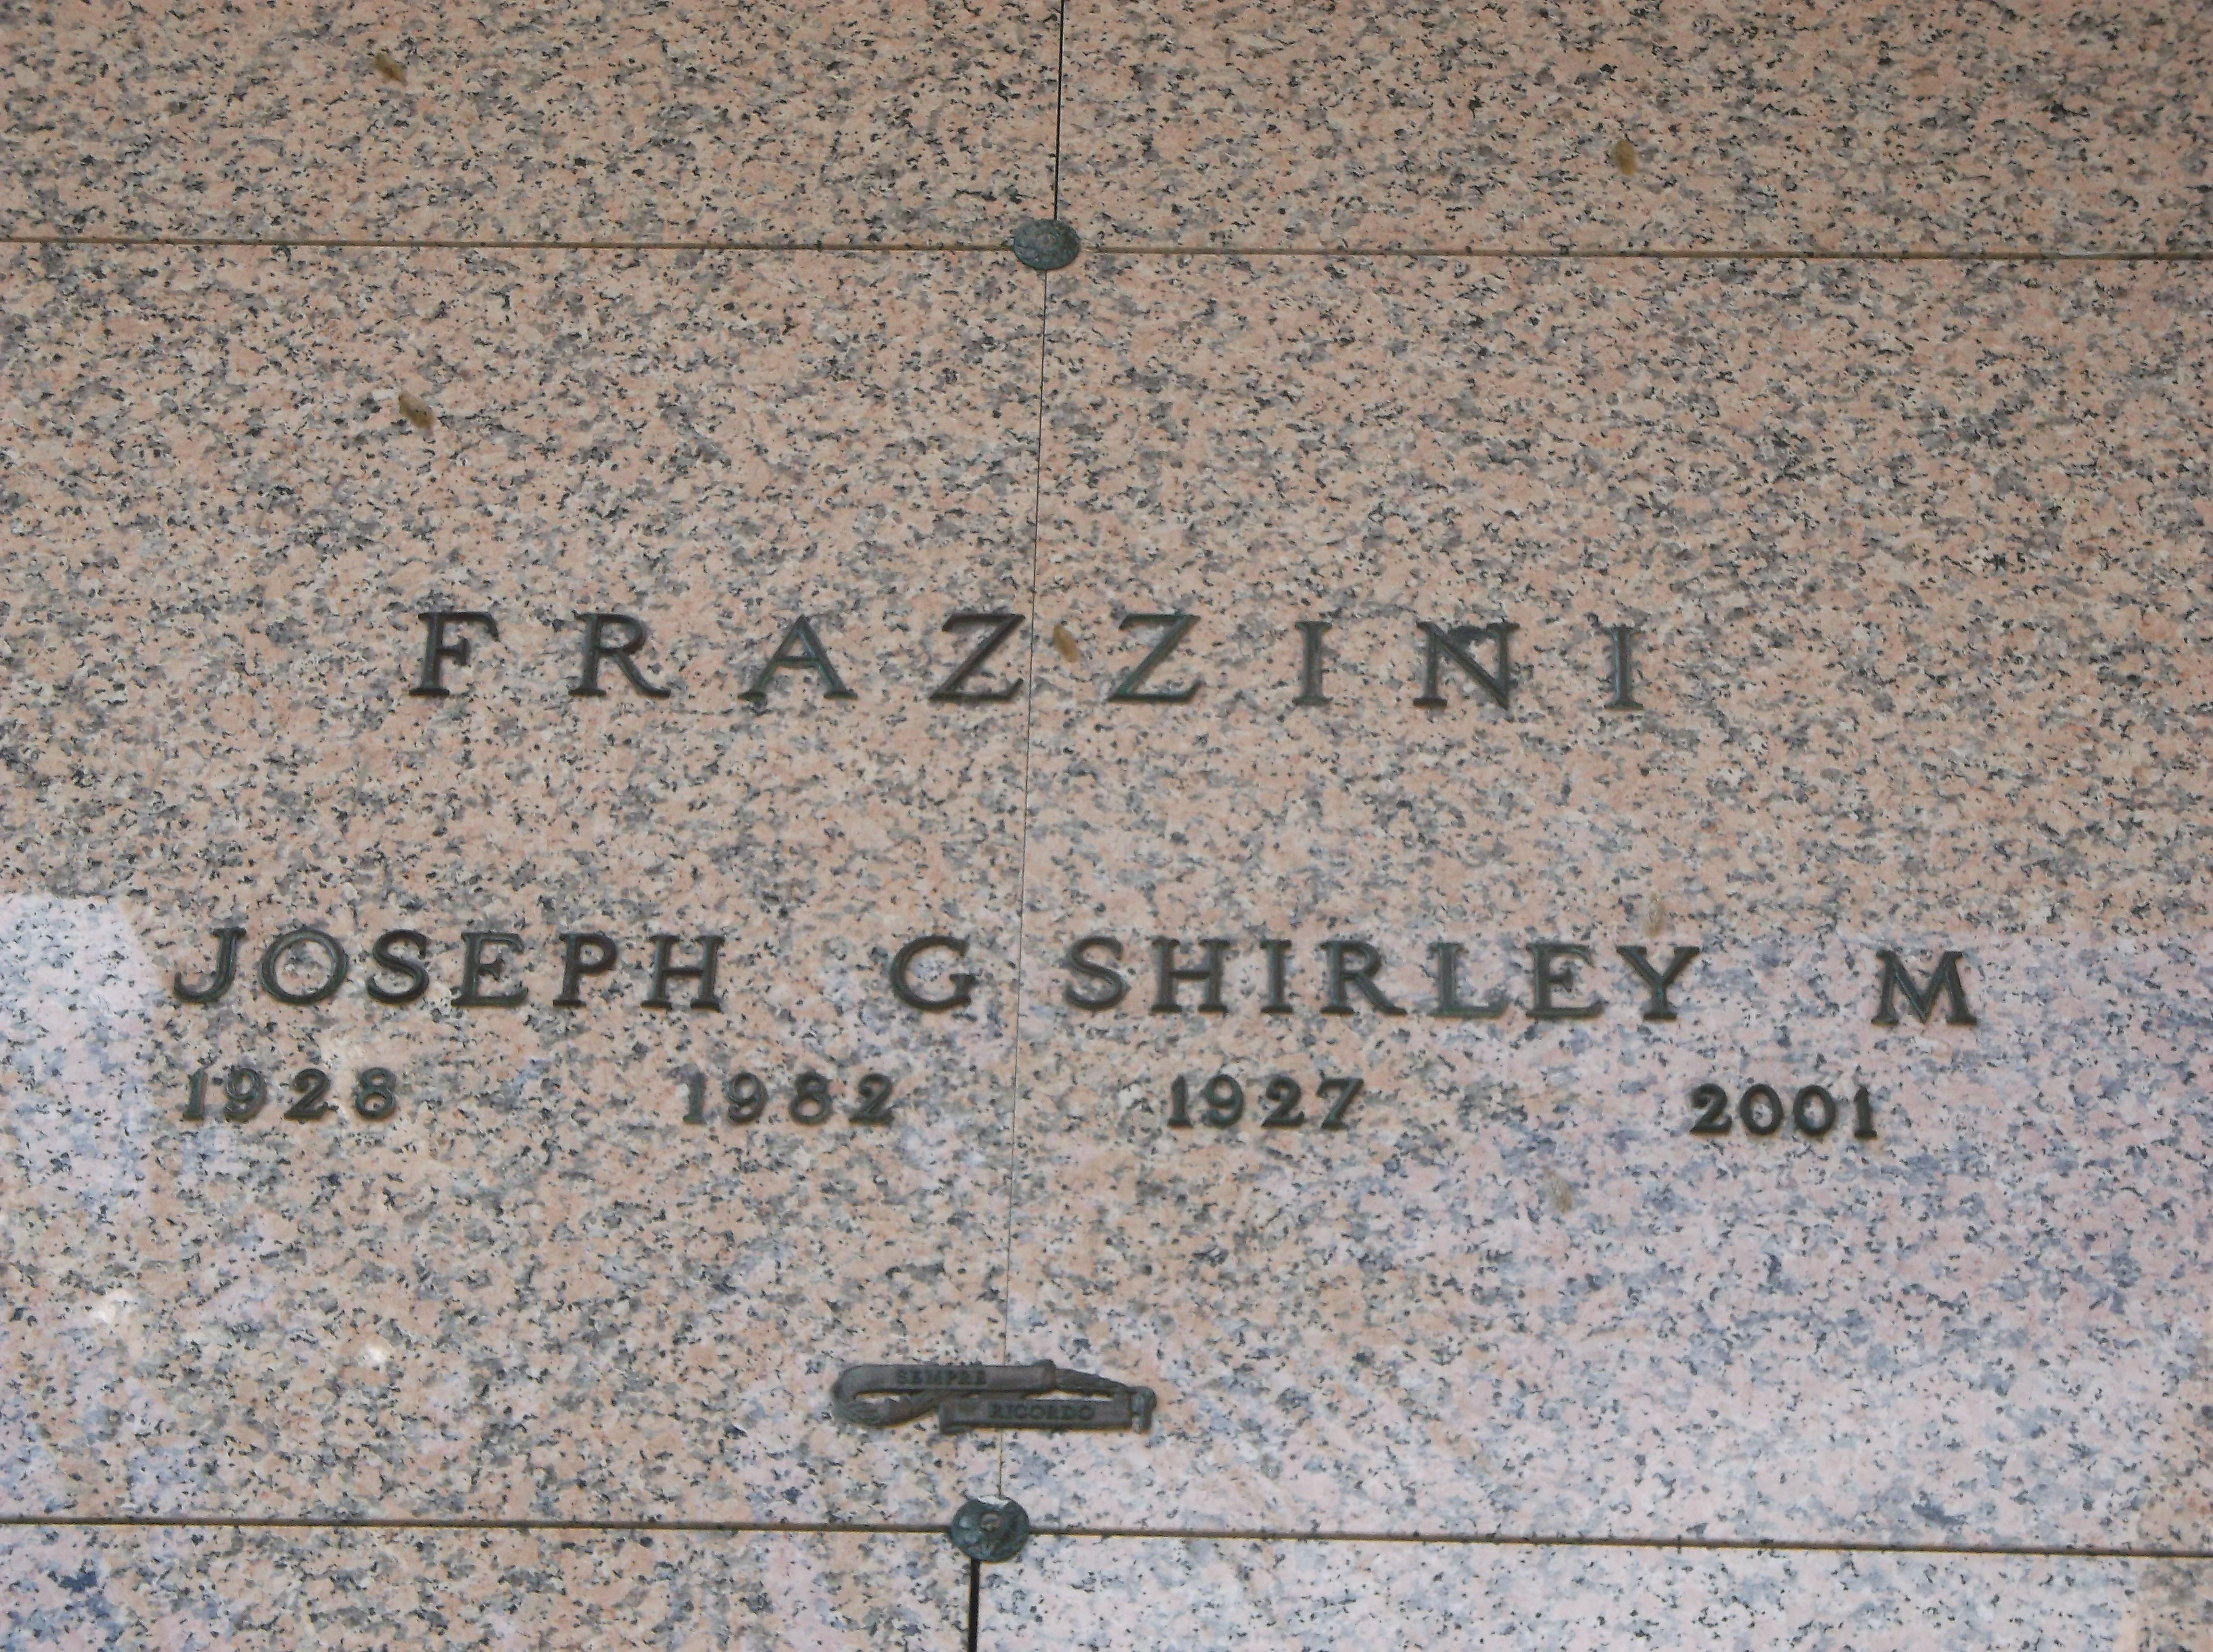 Shirley M Frazzini